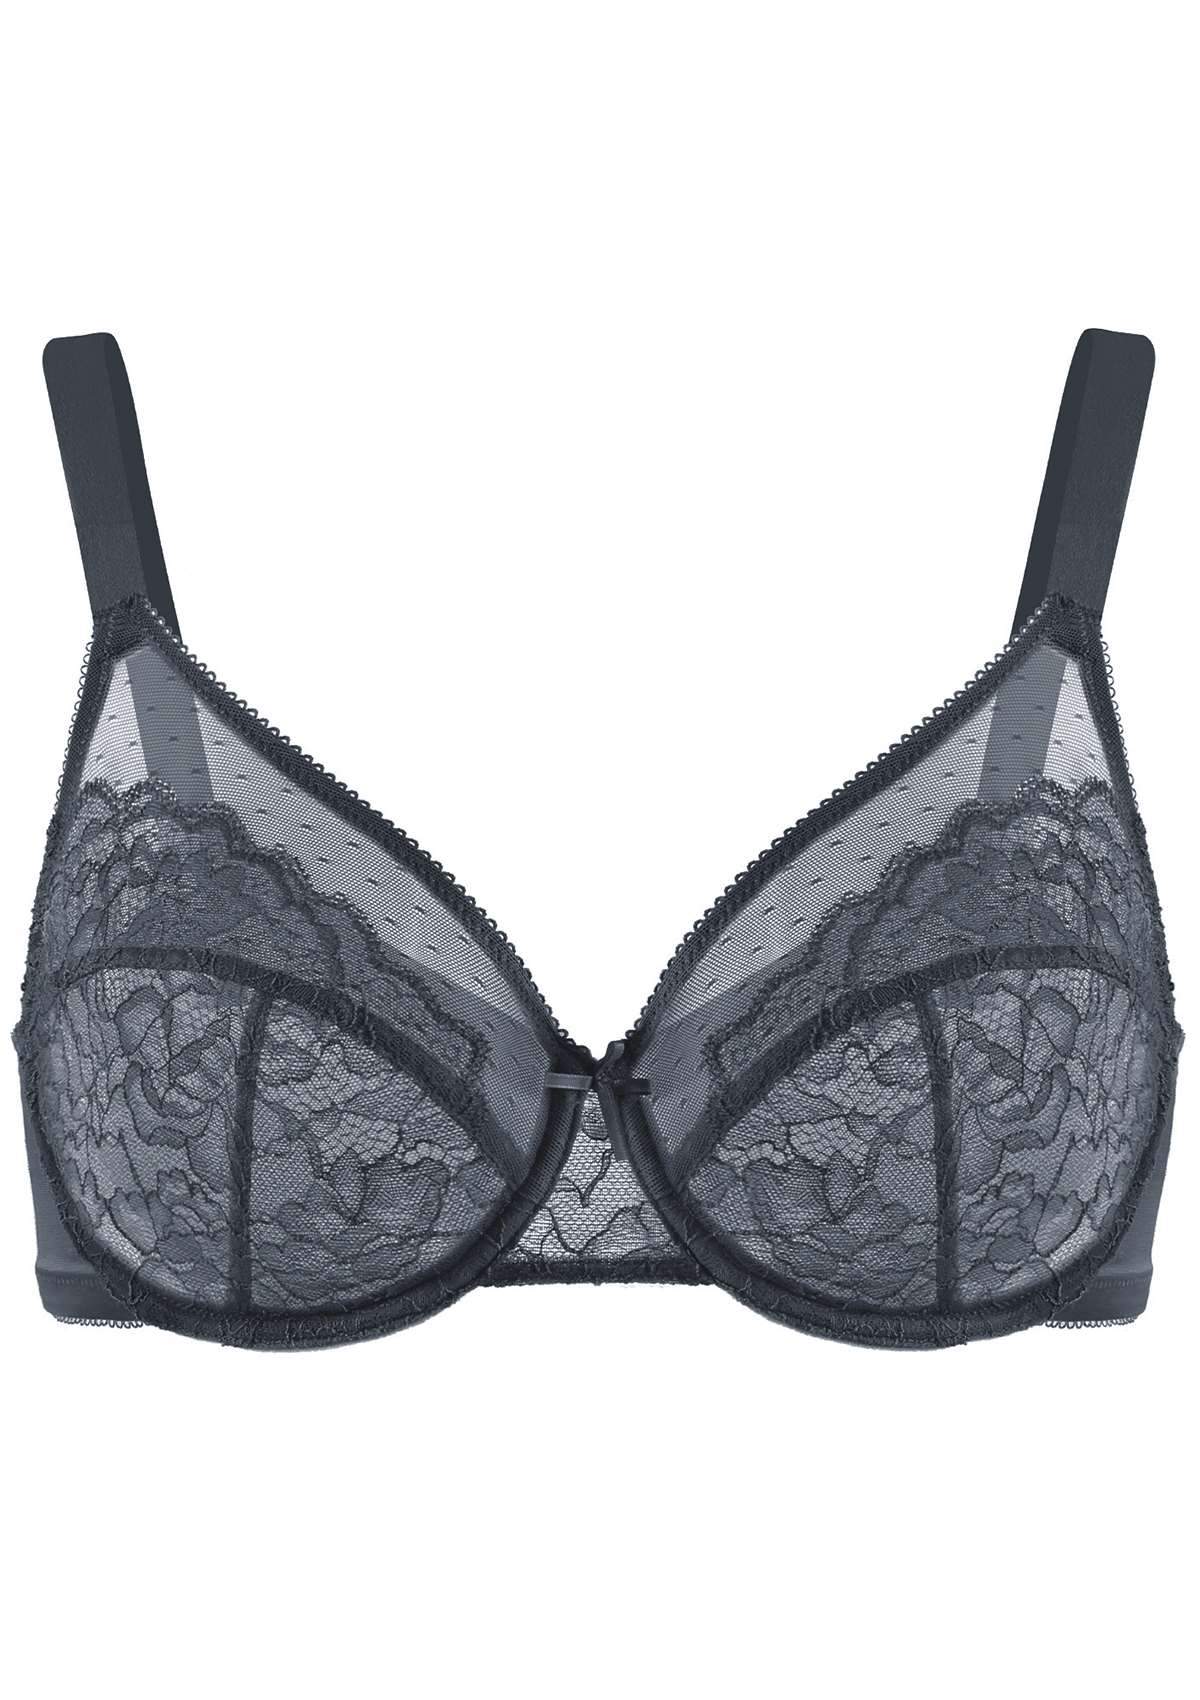 HSIA Enchante Matching Bra And Underwear Sets: Uplift Big Boobs Bra - Dark Gray / 42 / D